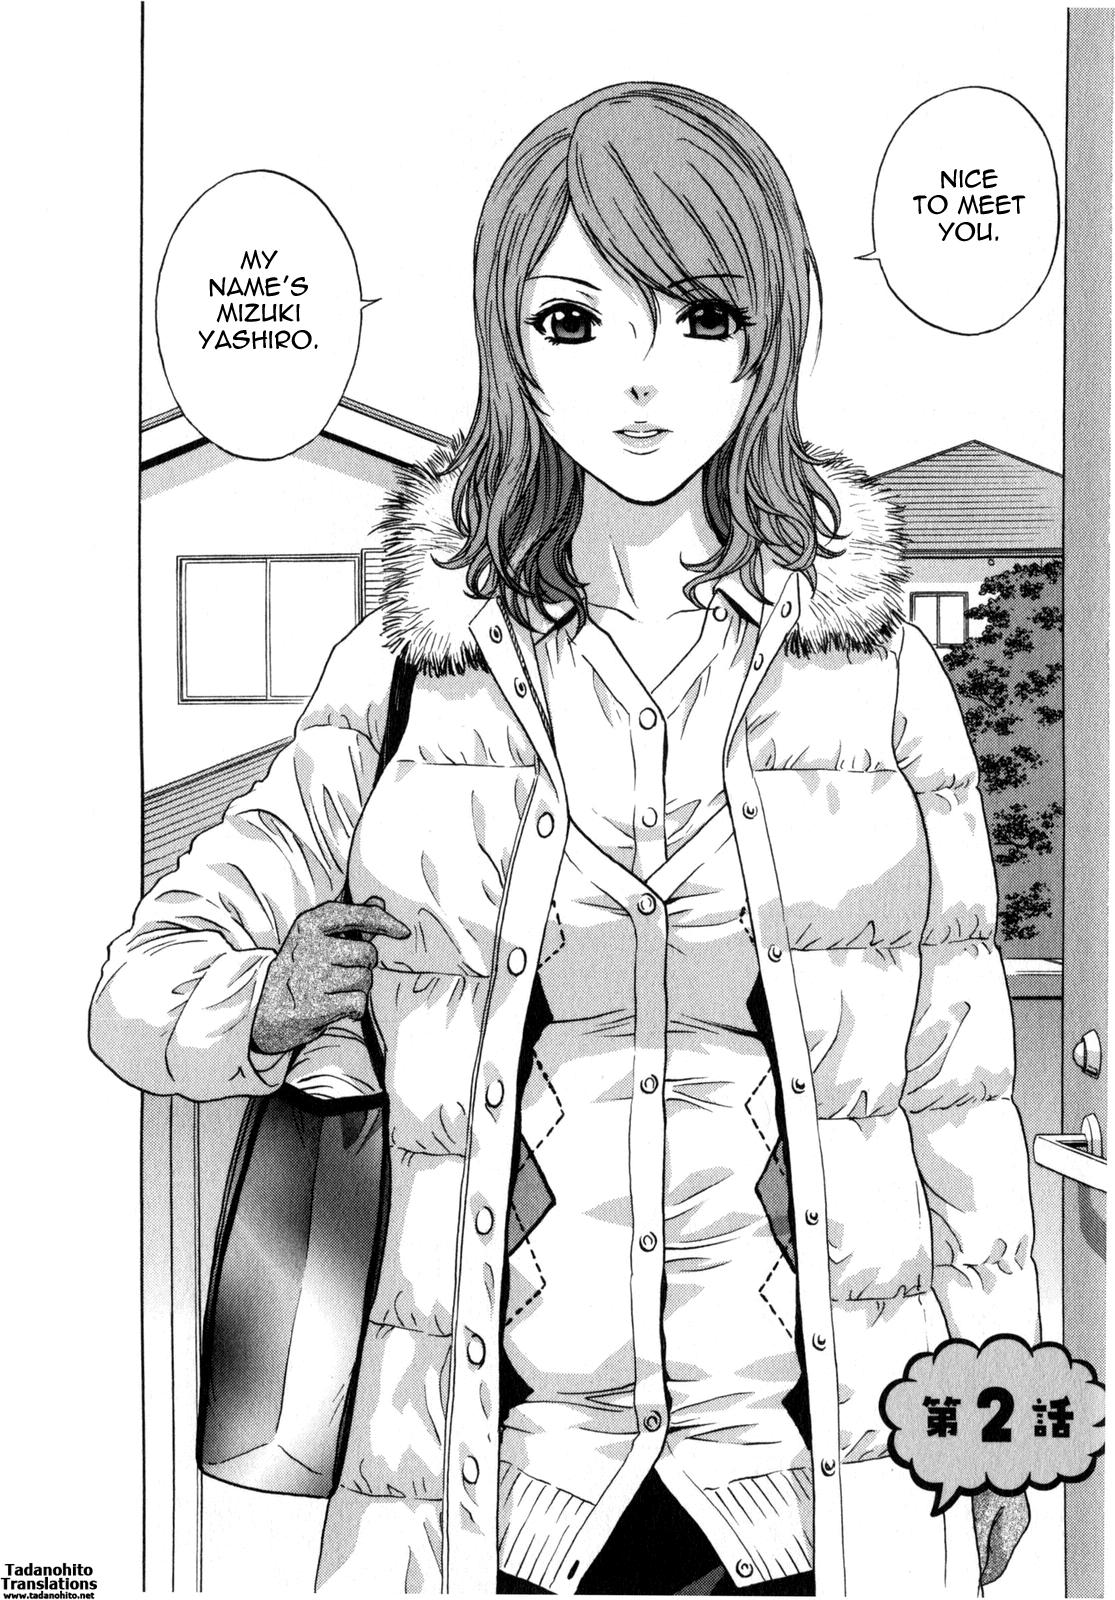 [Hidemaru] Life with Married Women Just Like a Manga 2 - Ch. 1-6 [English] {Tadanohito} 28